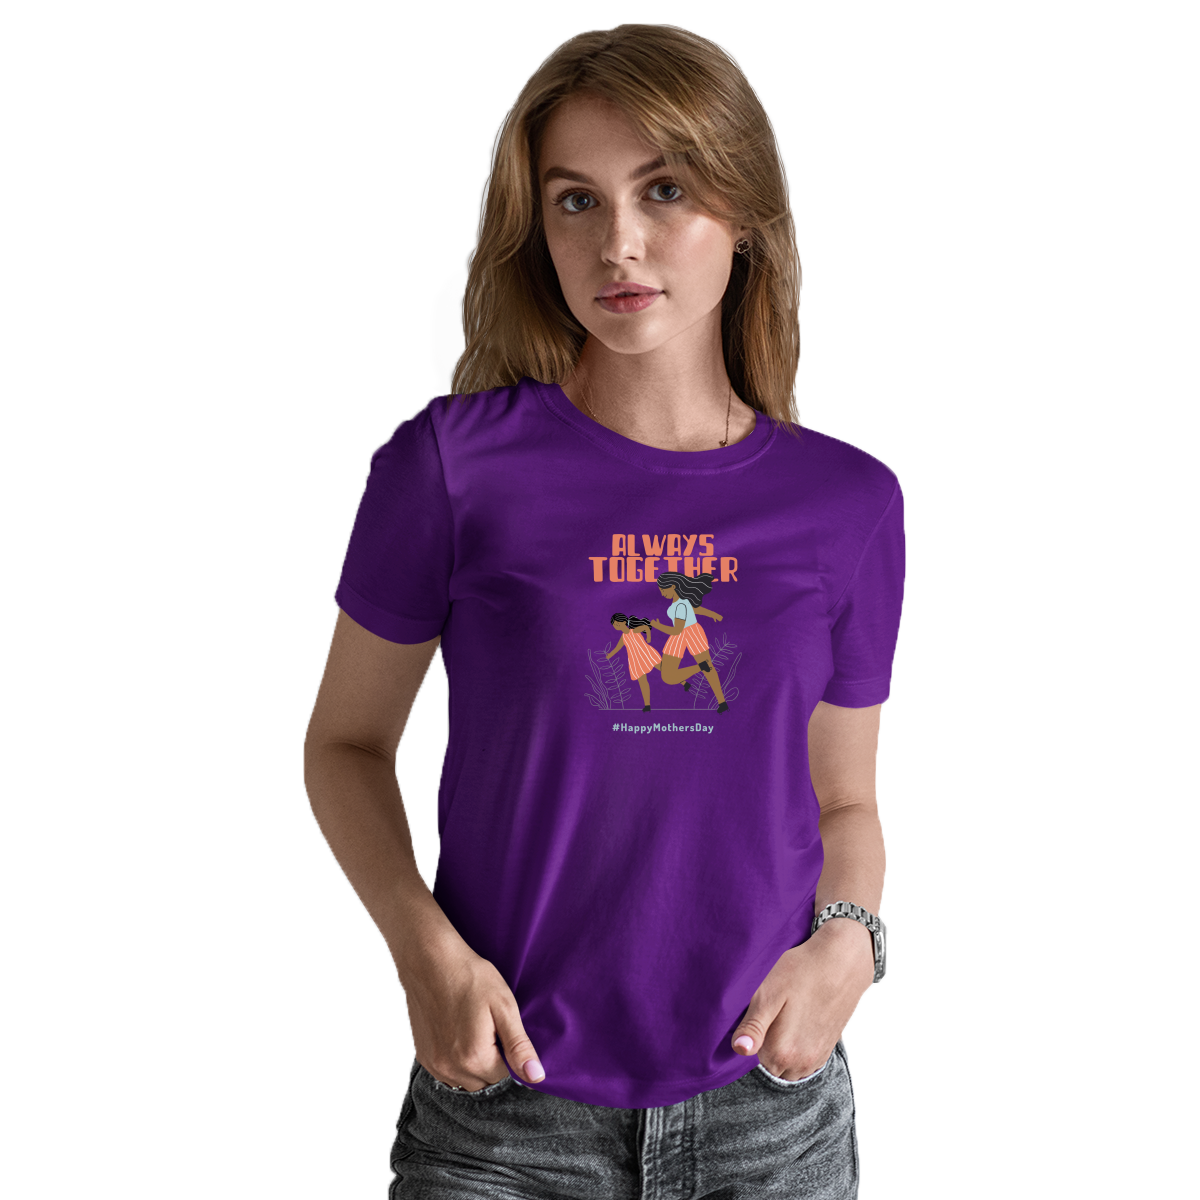 Always Together Women's T-shirt | Purple